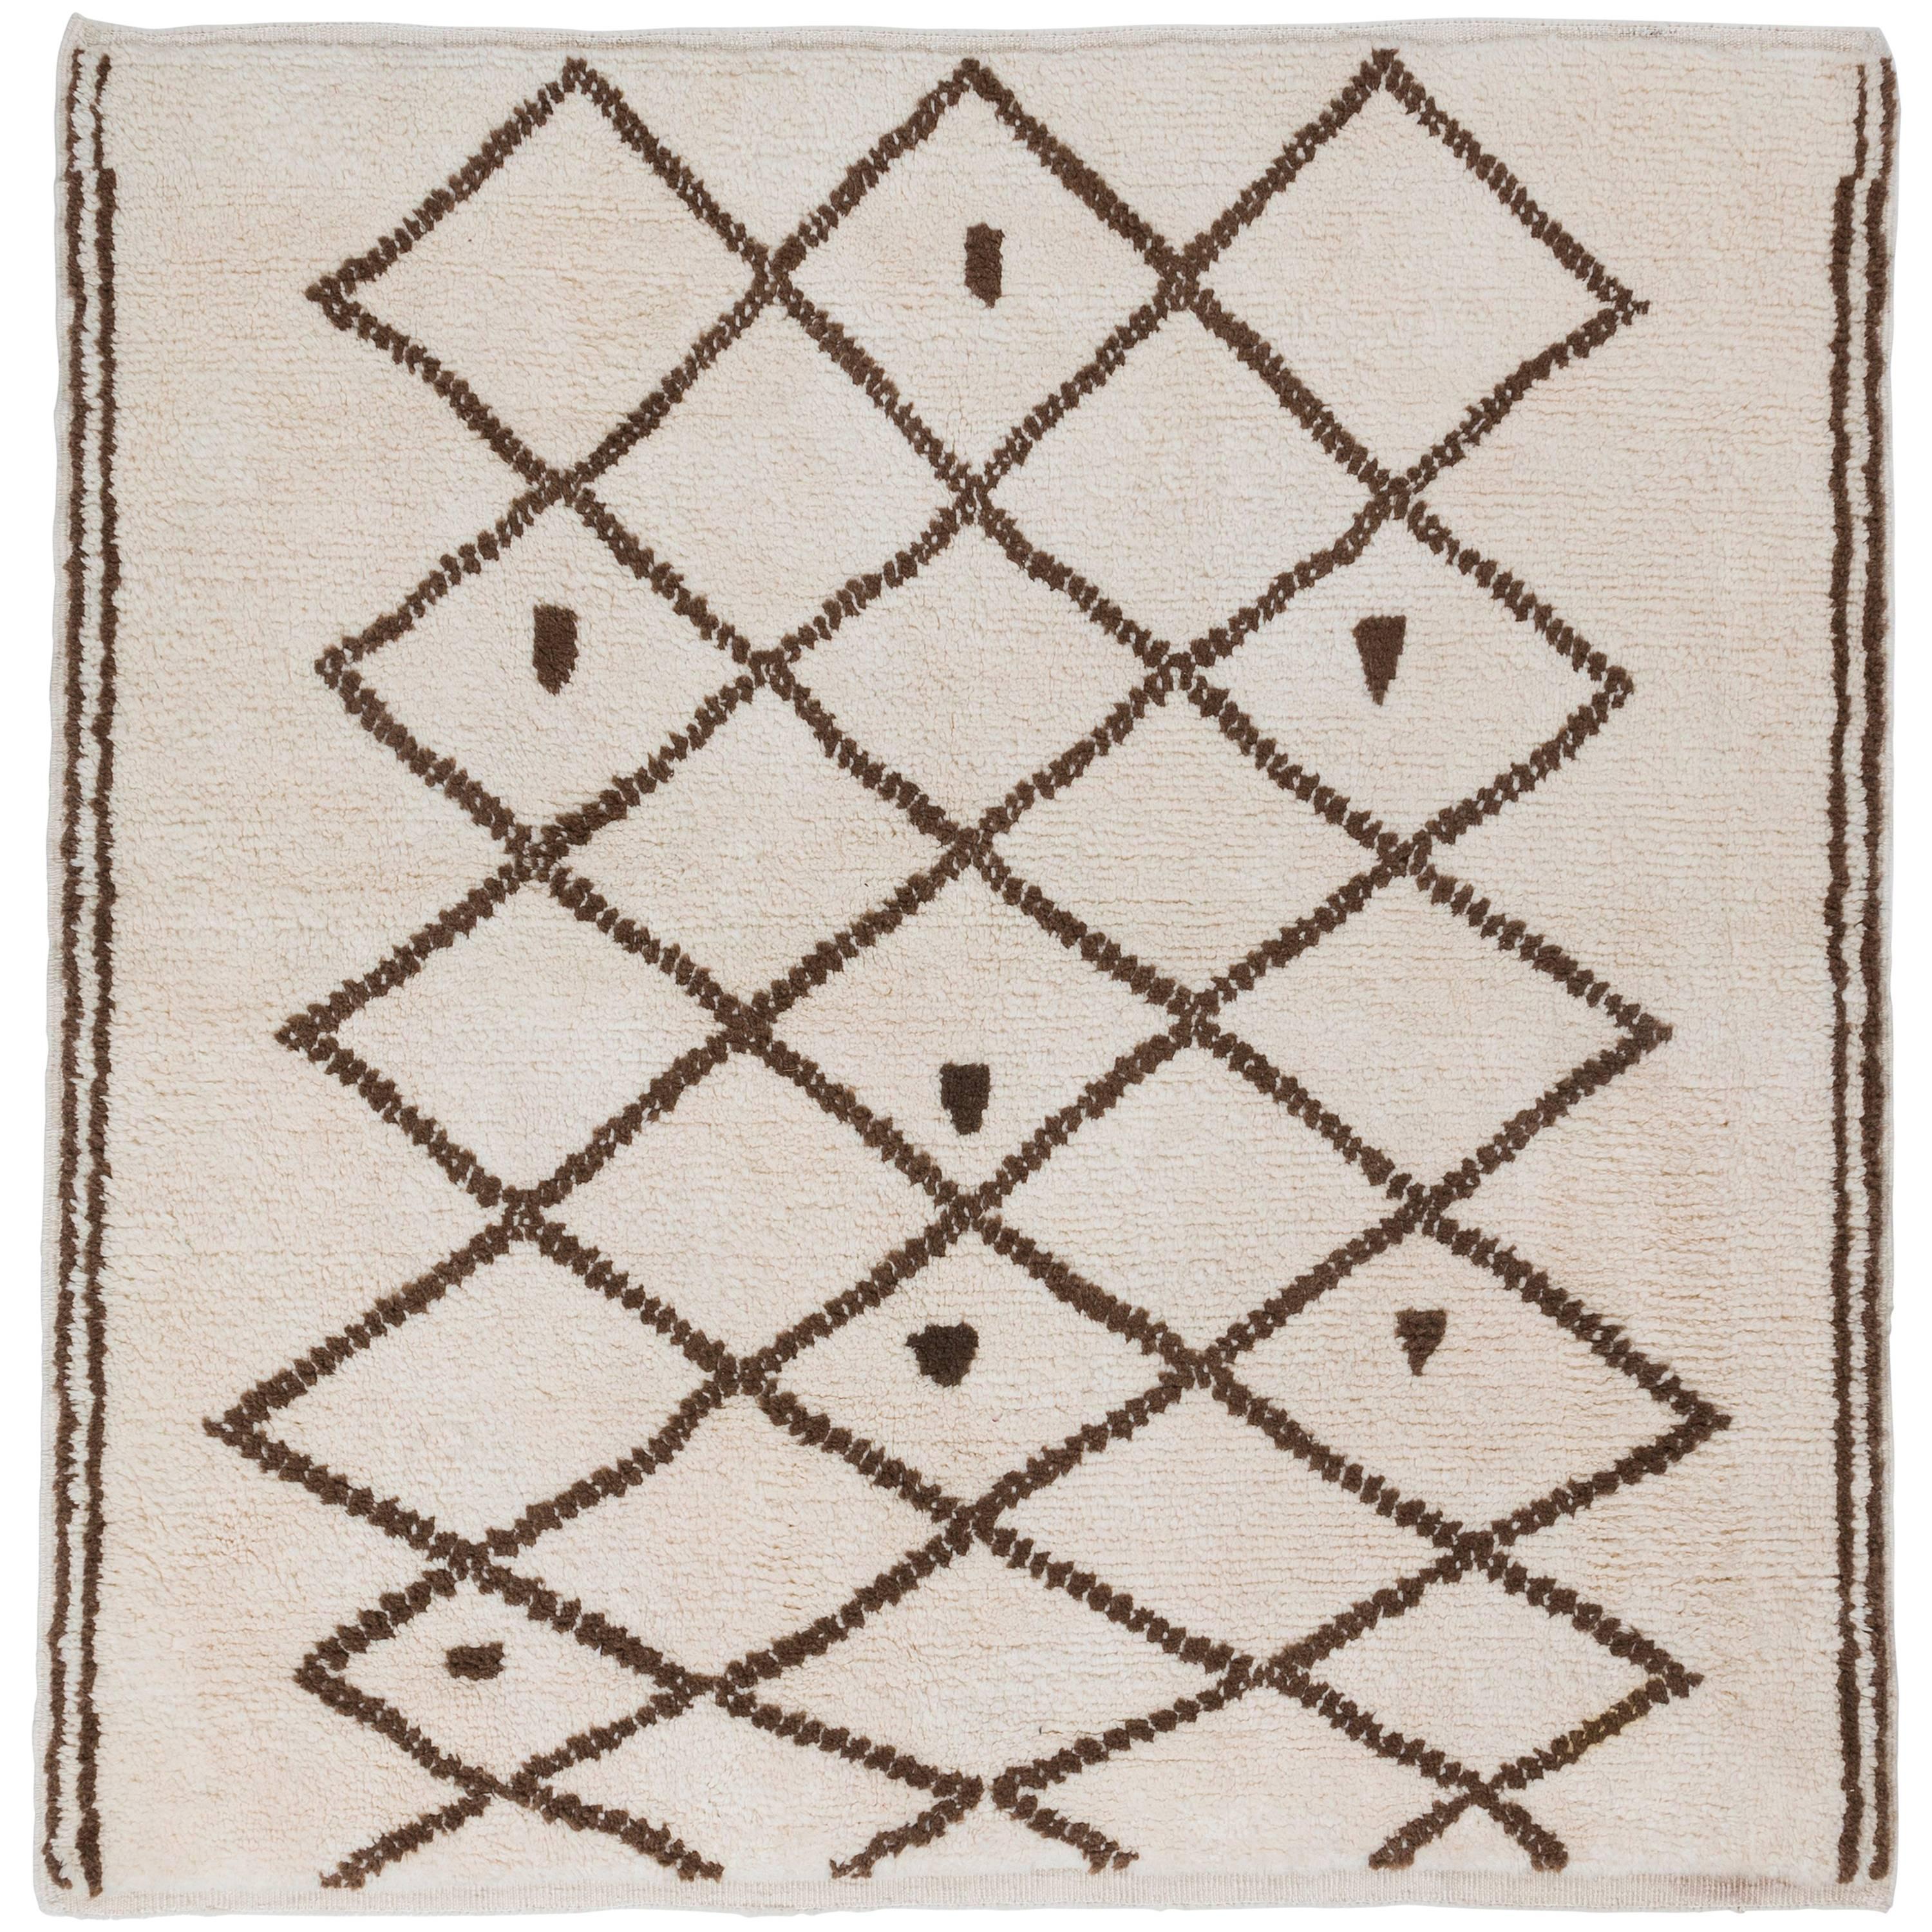 6x6 Ft Moroccan Beni Ourain Tulu Rug with Soft Wool Pile. Custom Berber Carpet